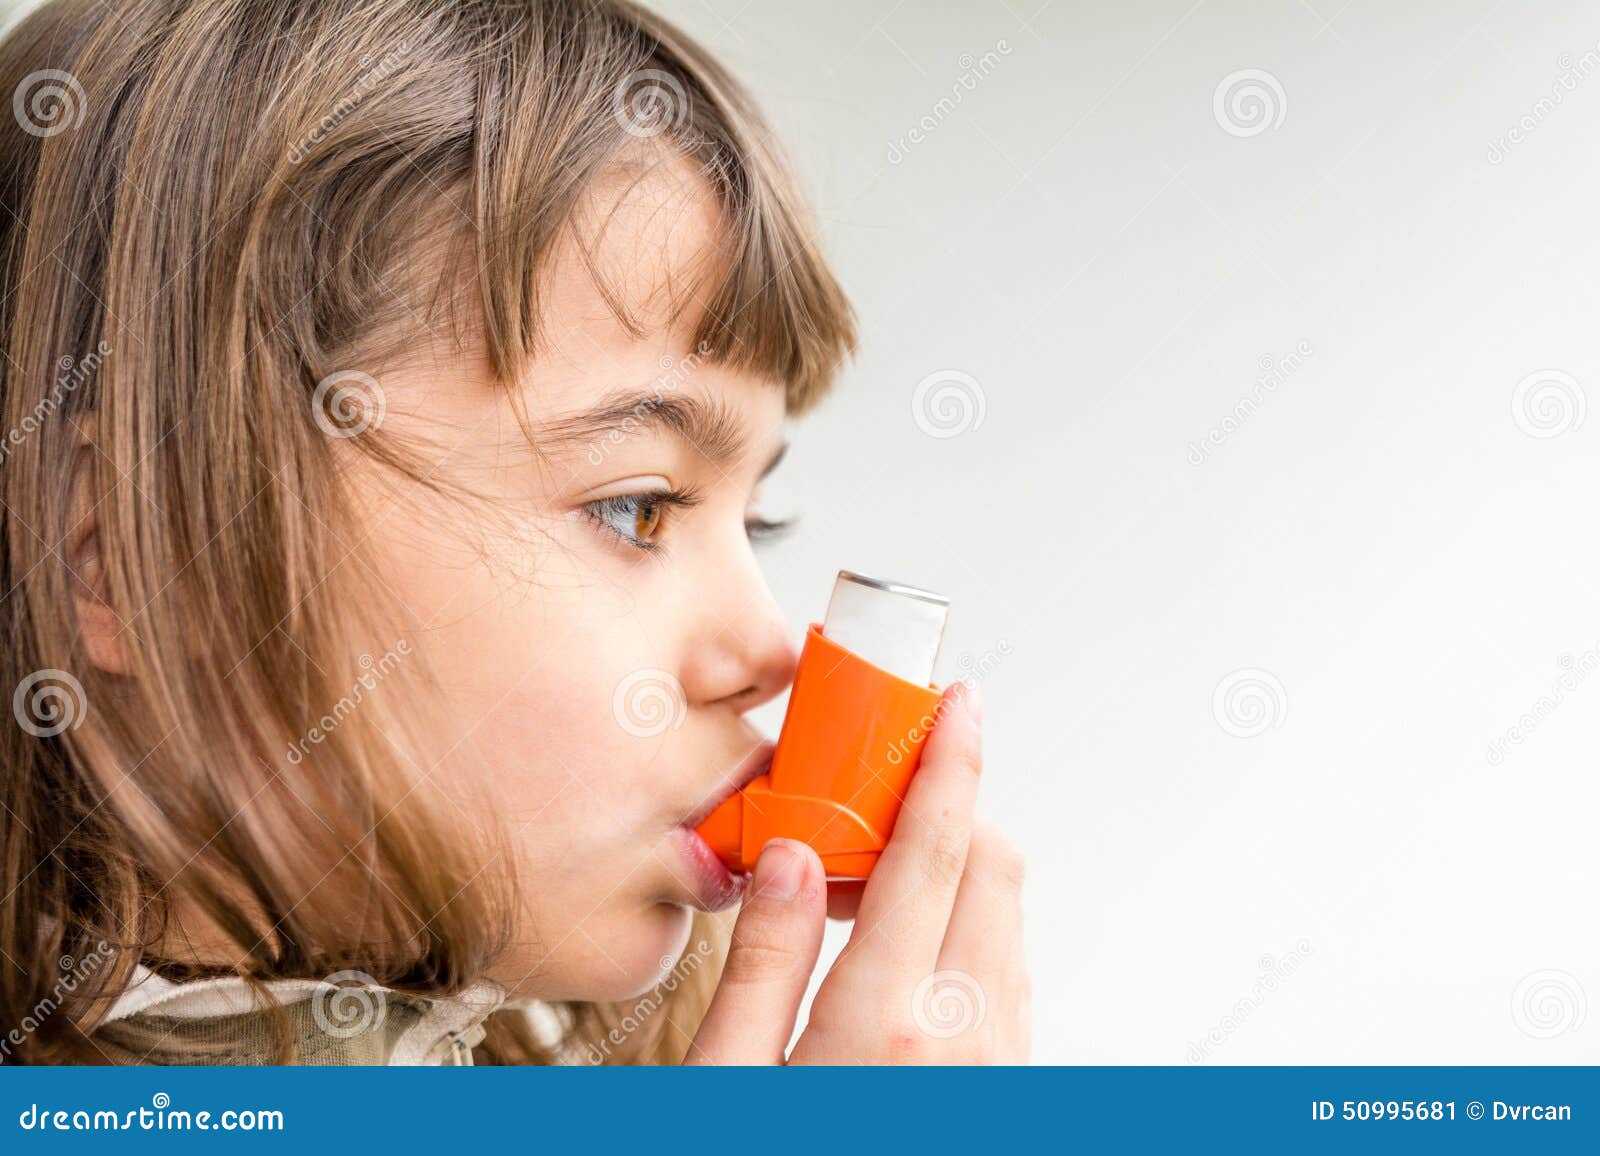 seven year old girl breathing asthmatic medicine healthcare inhaler